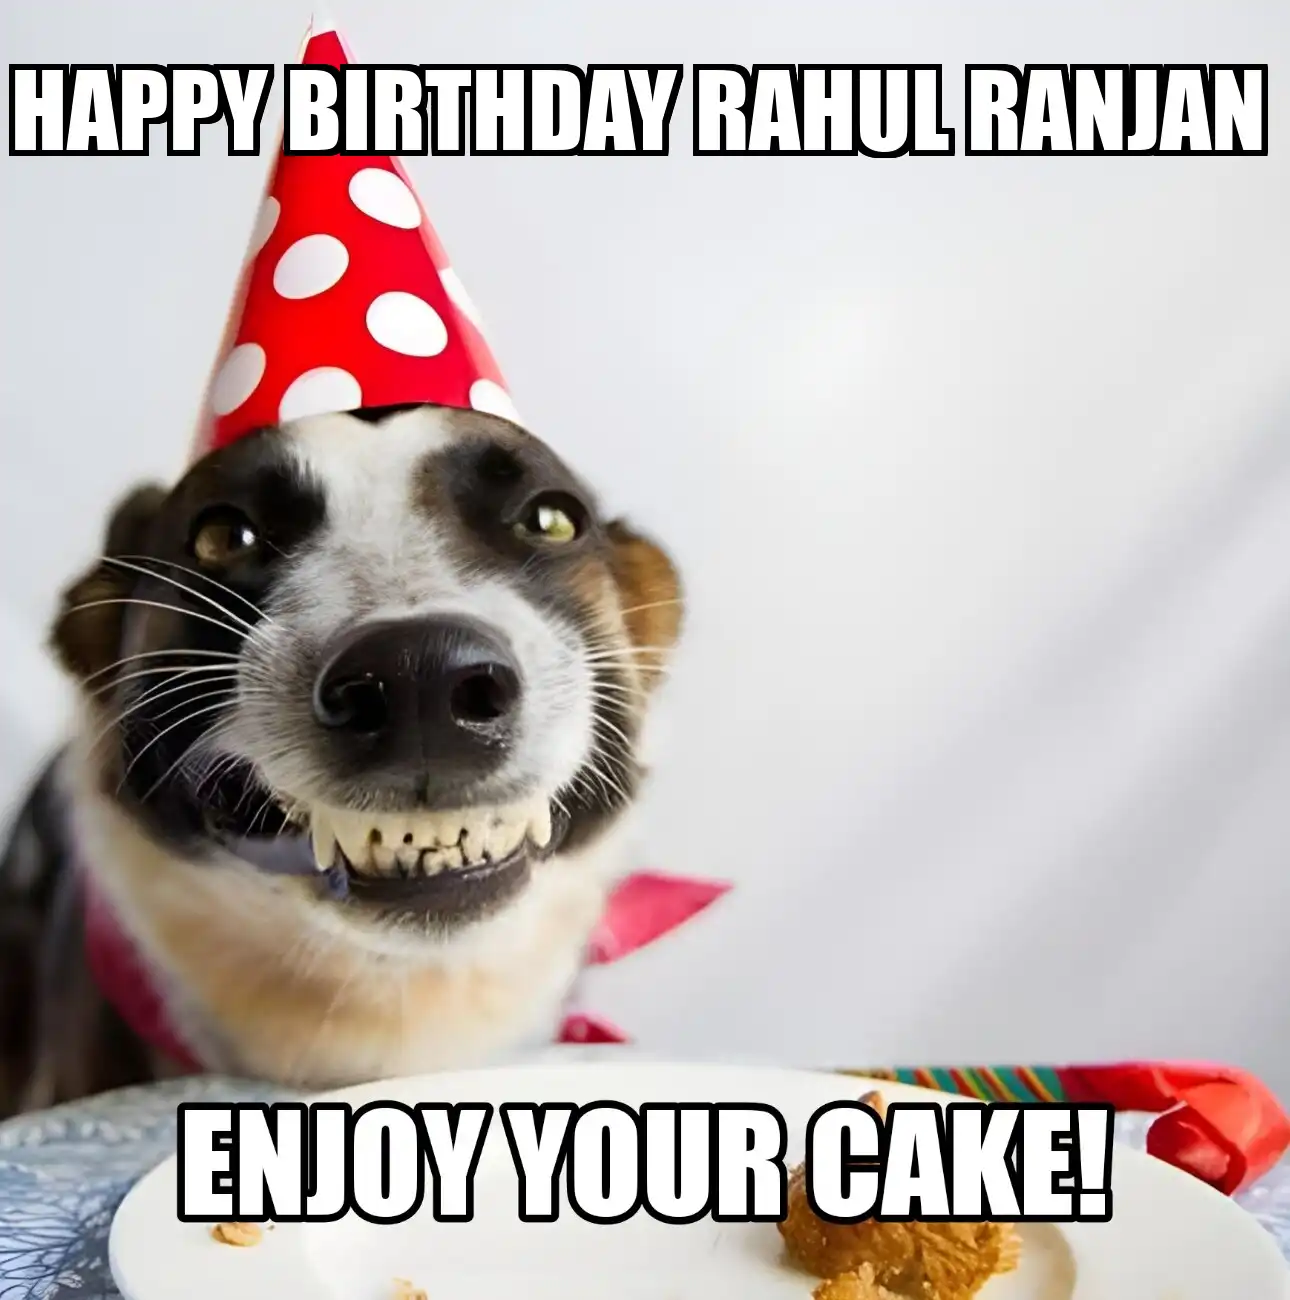 Happy Birthday Rahul Ranjan Enjoy Your Cake Dog Meme